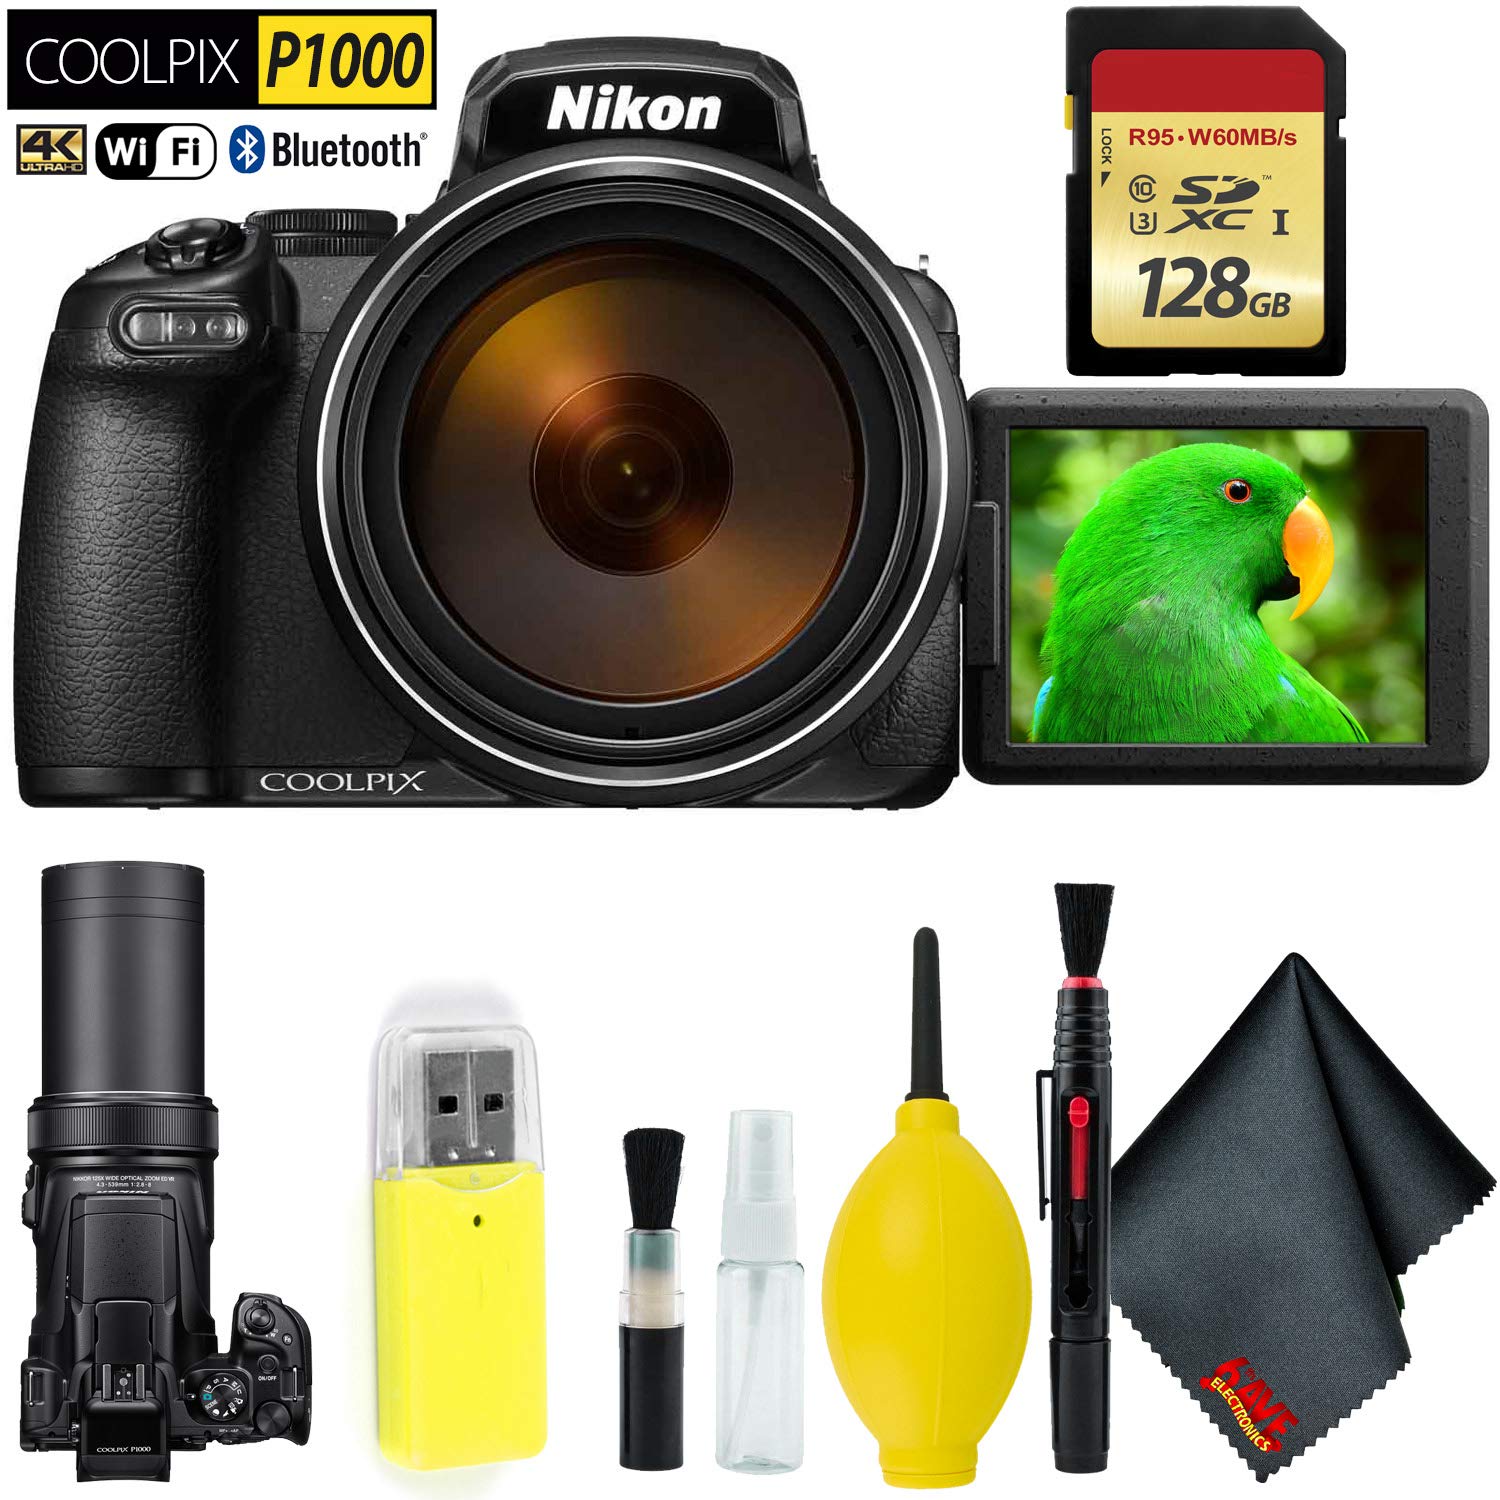 Nikon COOLPIX P1000 Digital Camera + 128GB Memory Card Base Bundle International Model